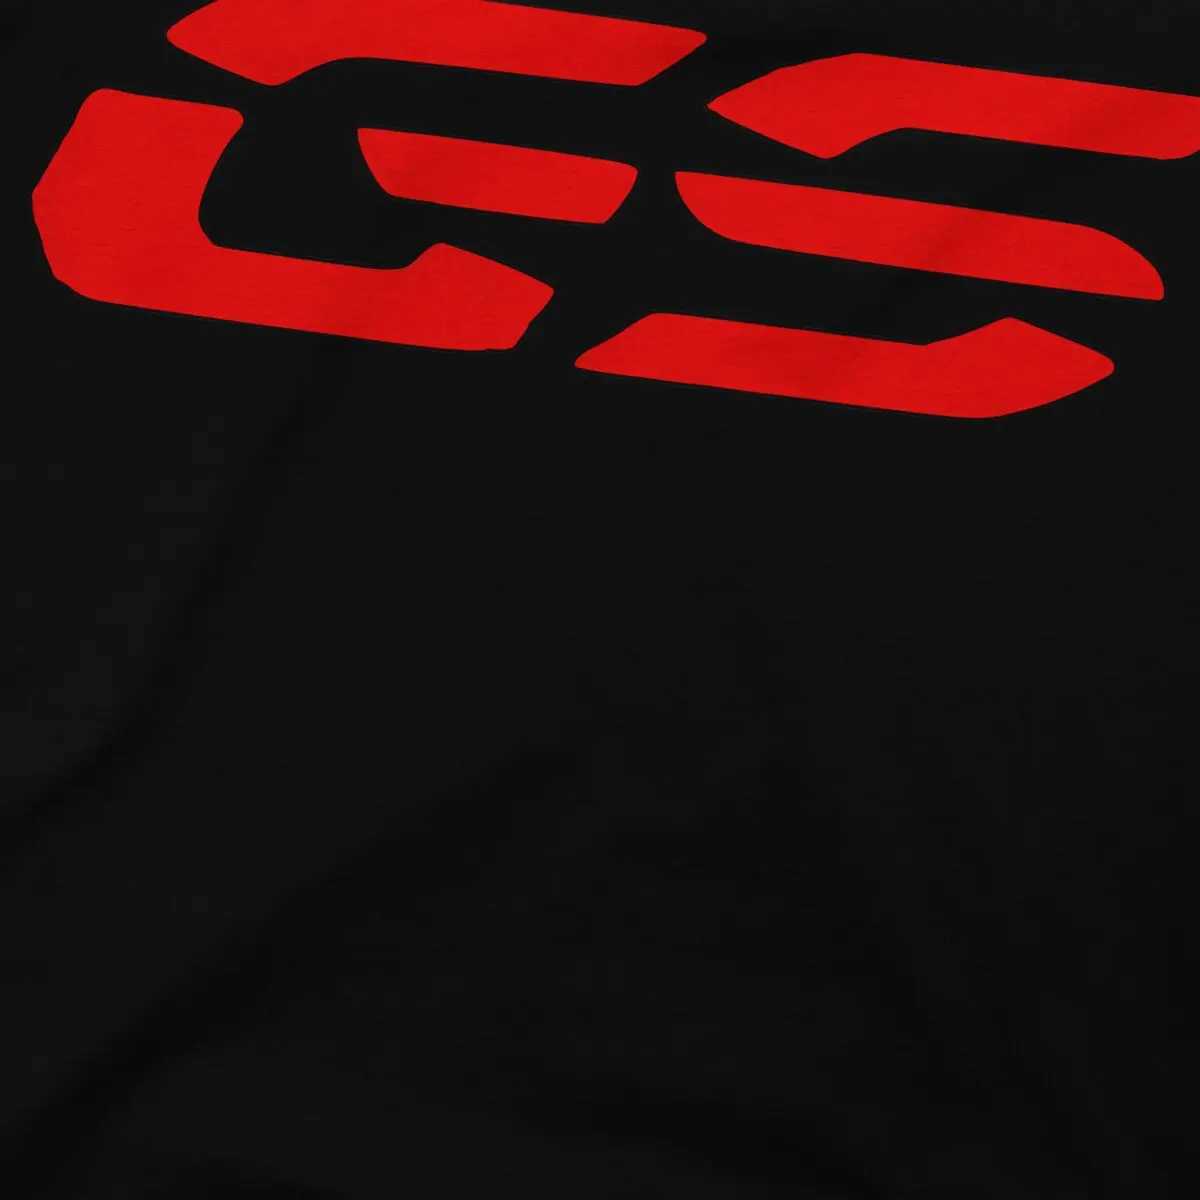 Мужские футболки GS Red Tshirt Graphic Men Men Tops Vintage Goth Summer Polyester Clothing футболка Harajuku T240425